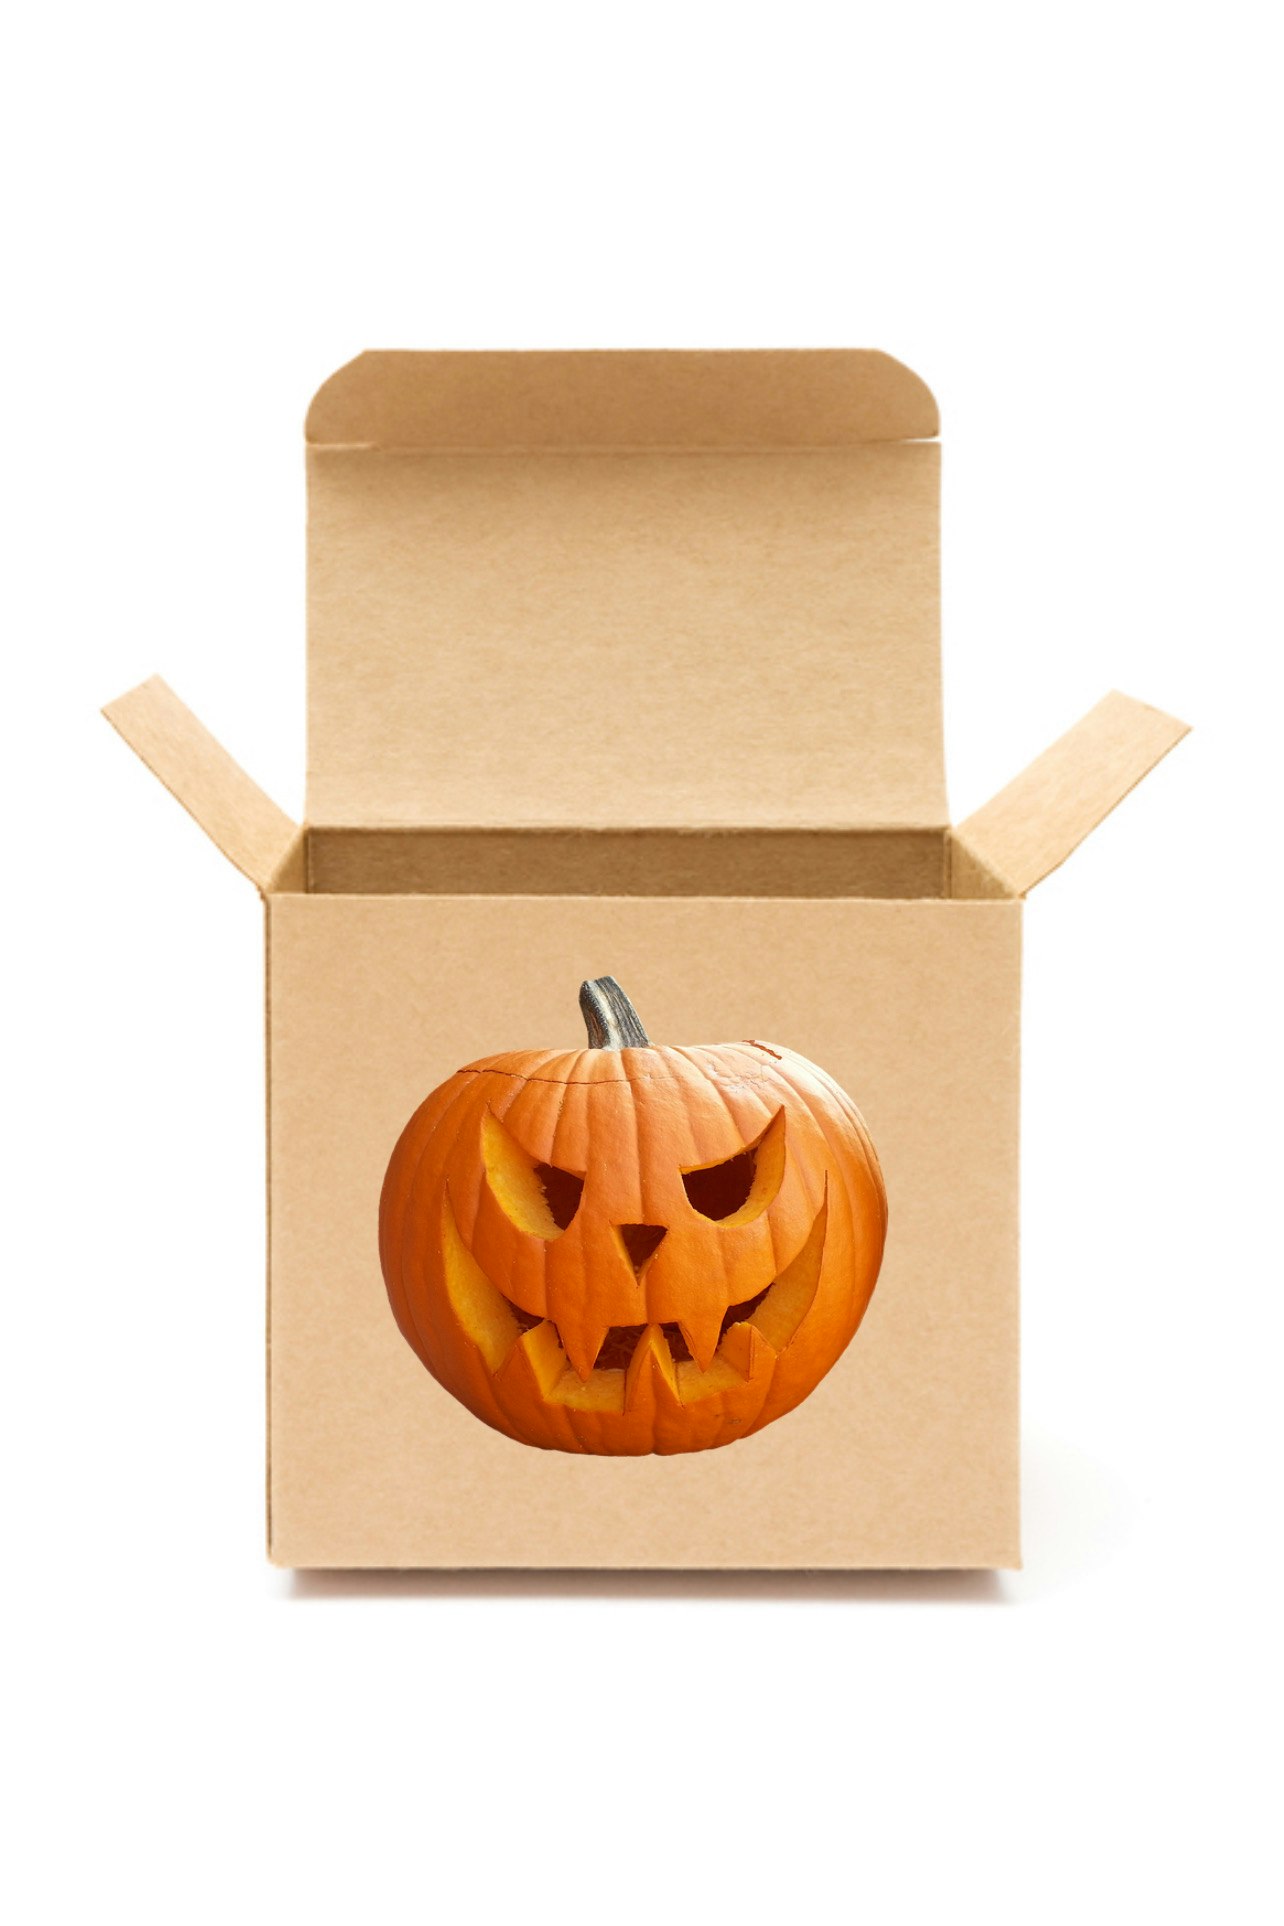 Pumpkin box 1